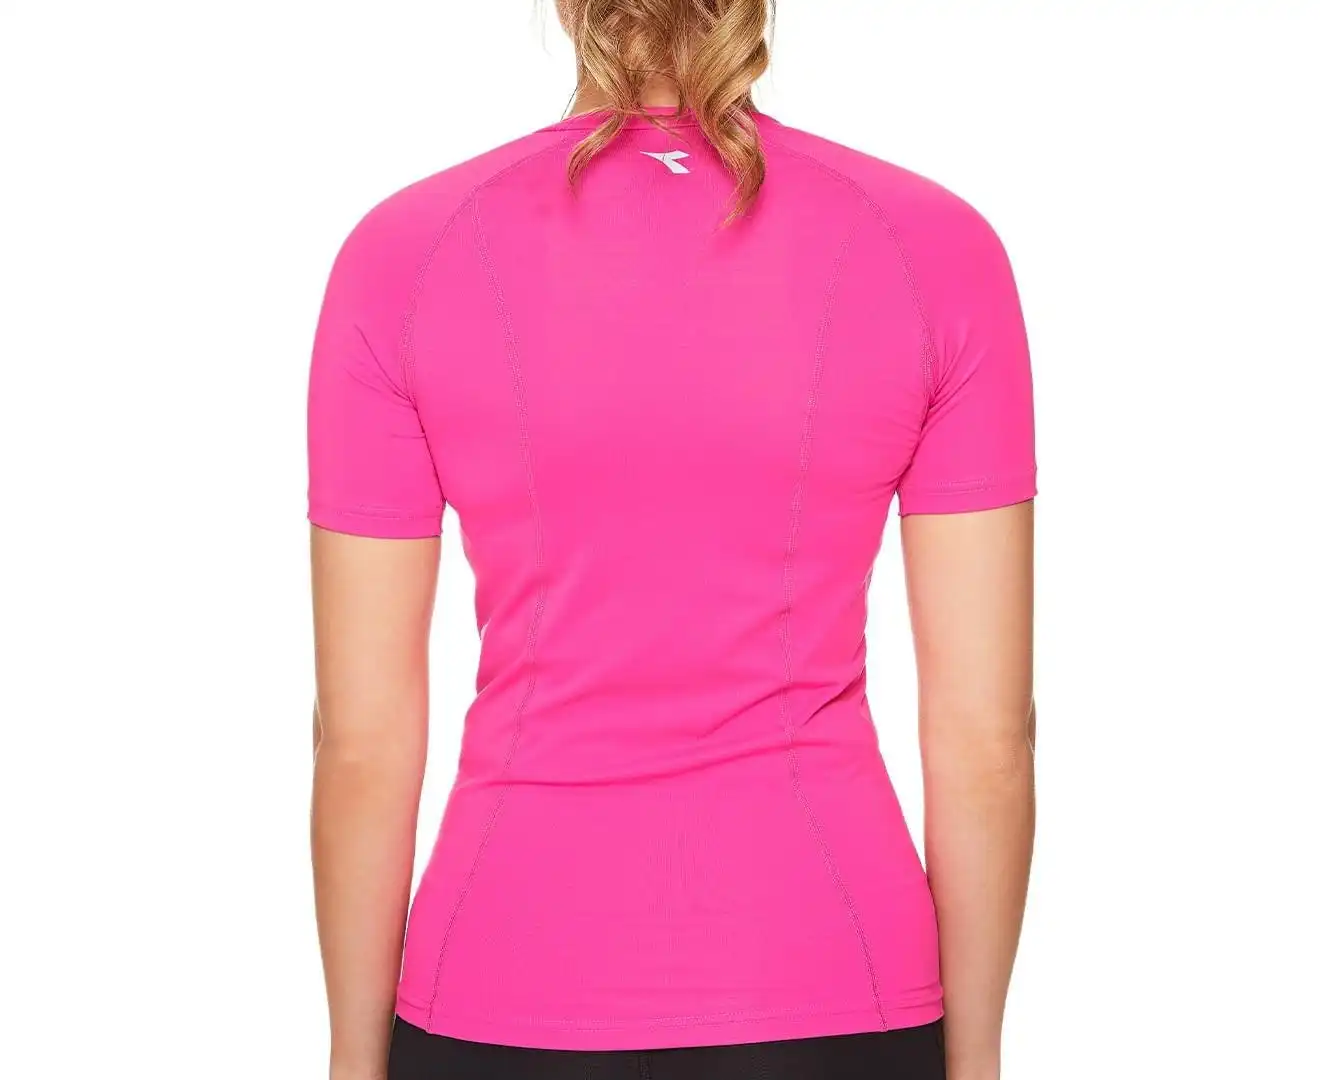 Diadora Ladies Compression Short Sleeve Top Fitness Gym Yoga - Pink